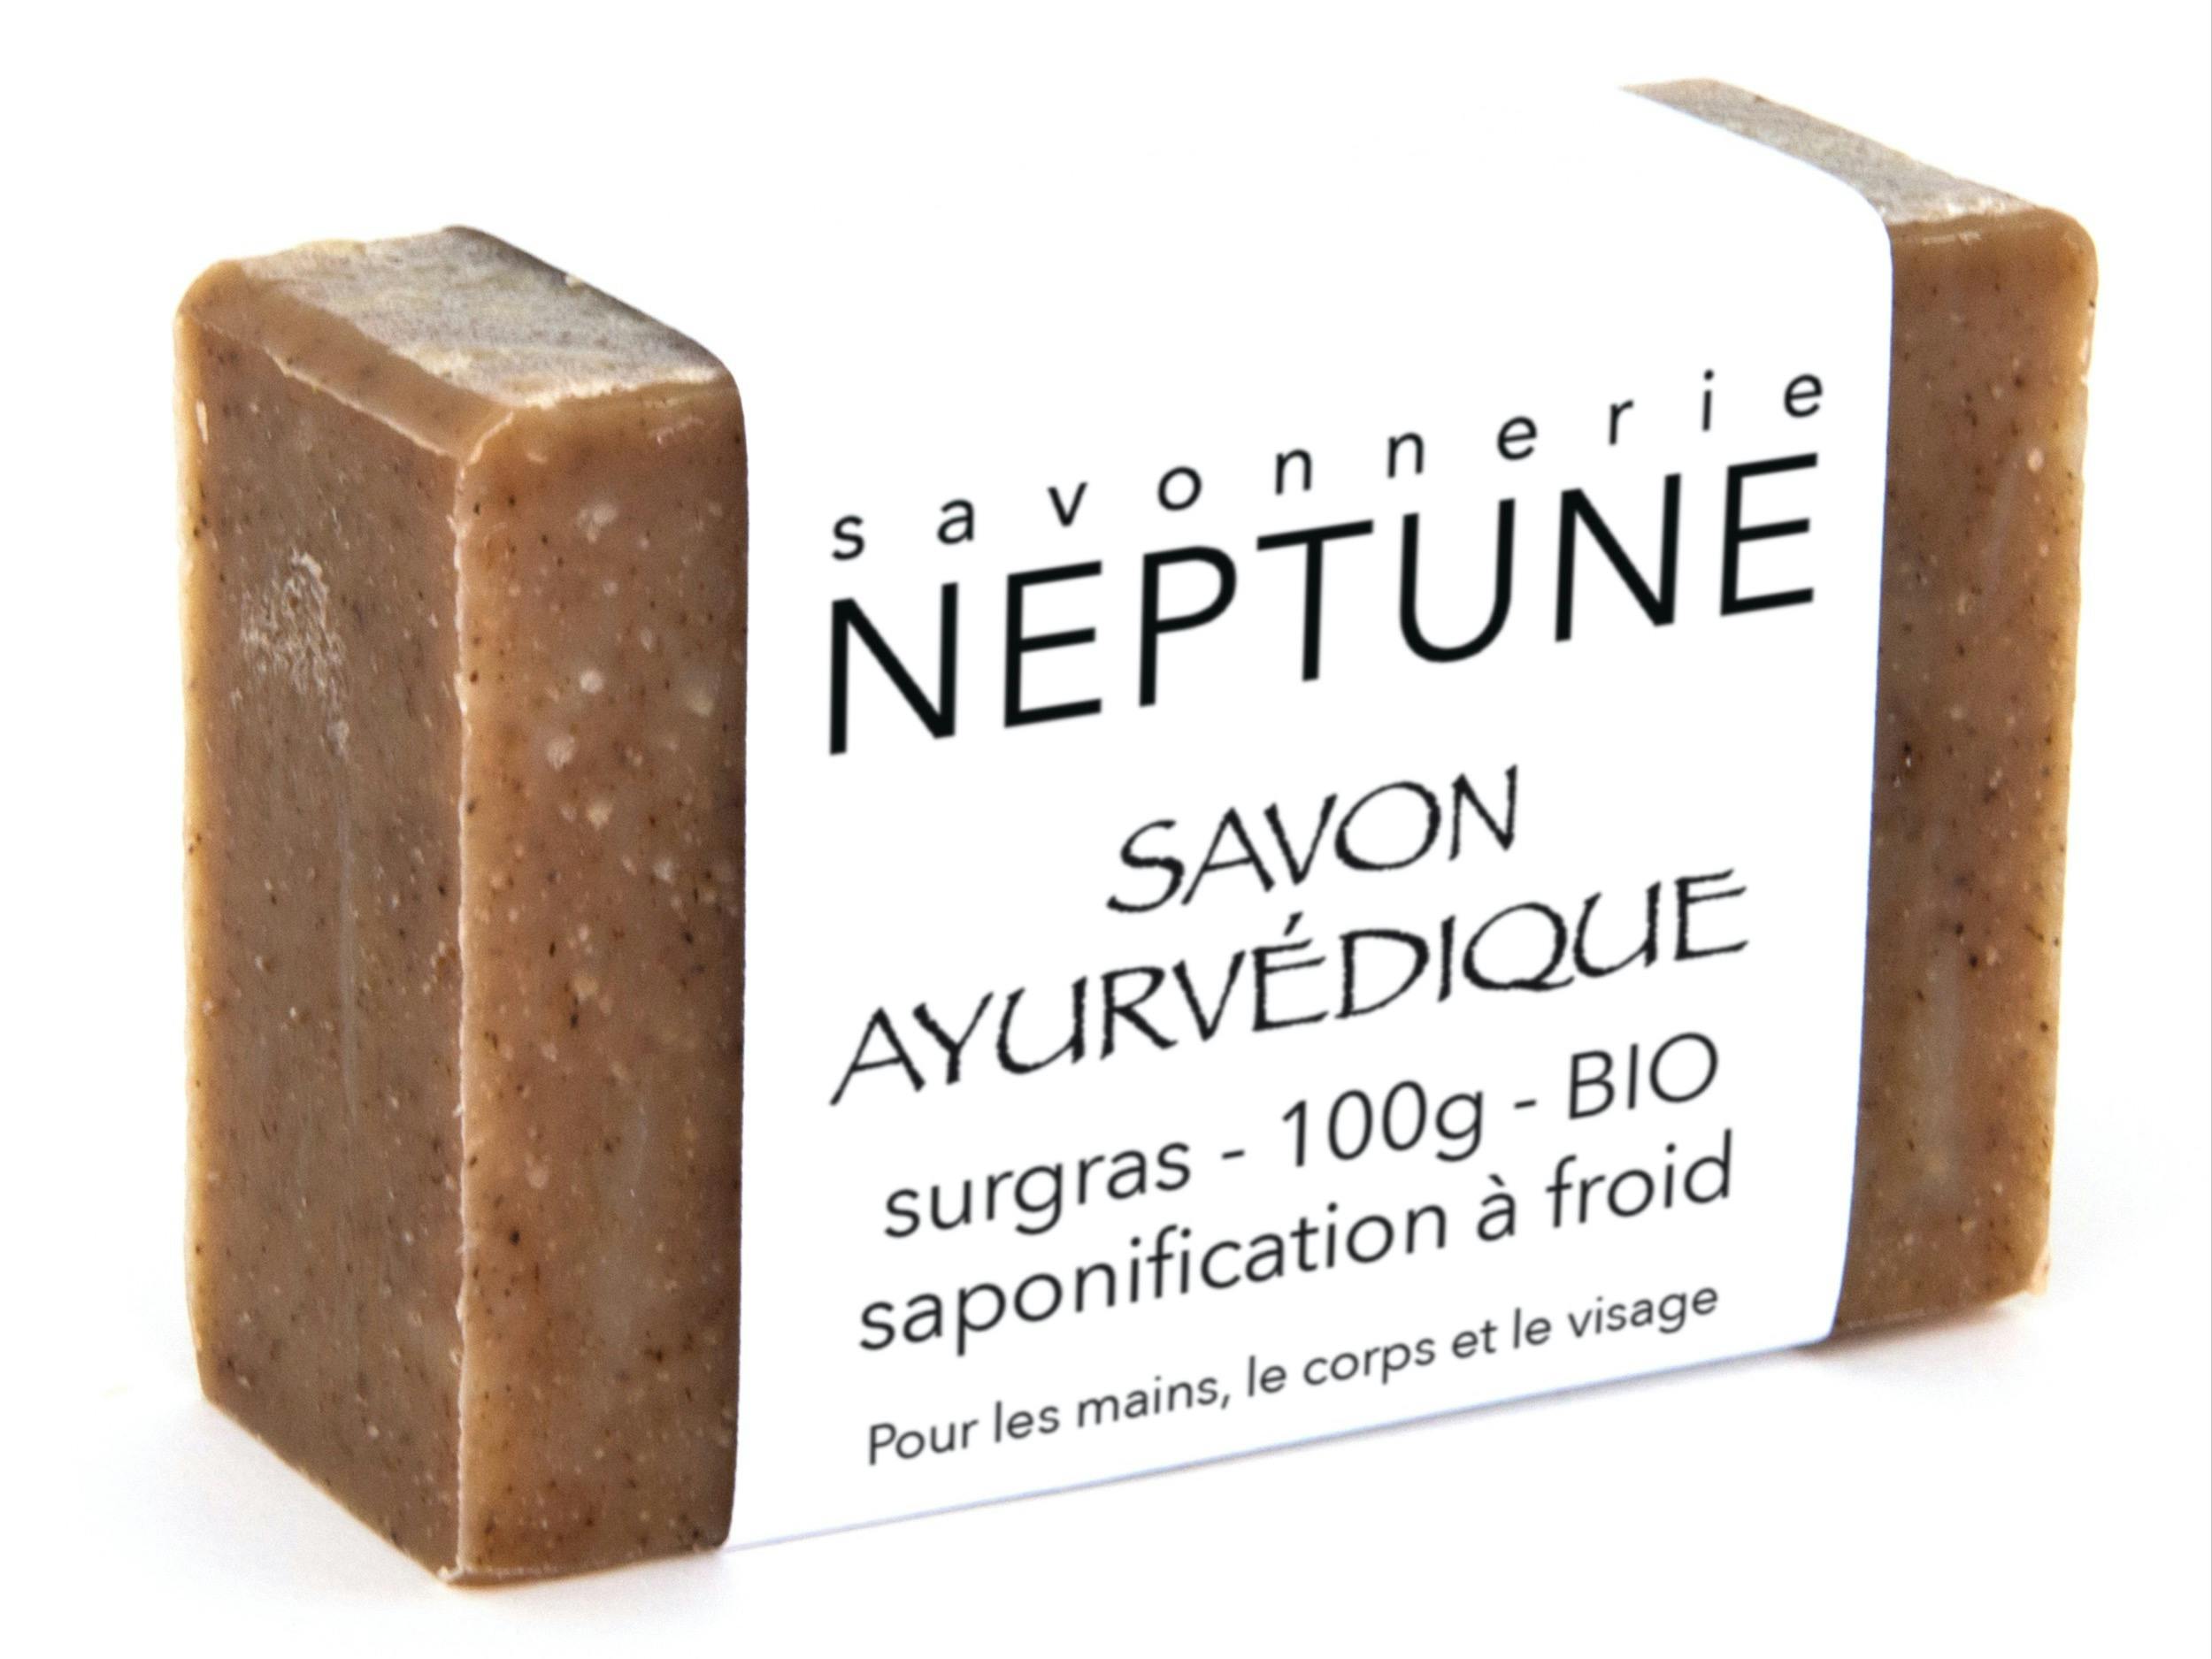 Ayurvedic soap - organic image 2